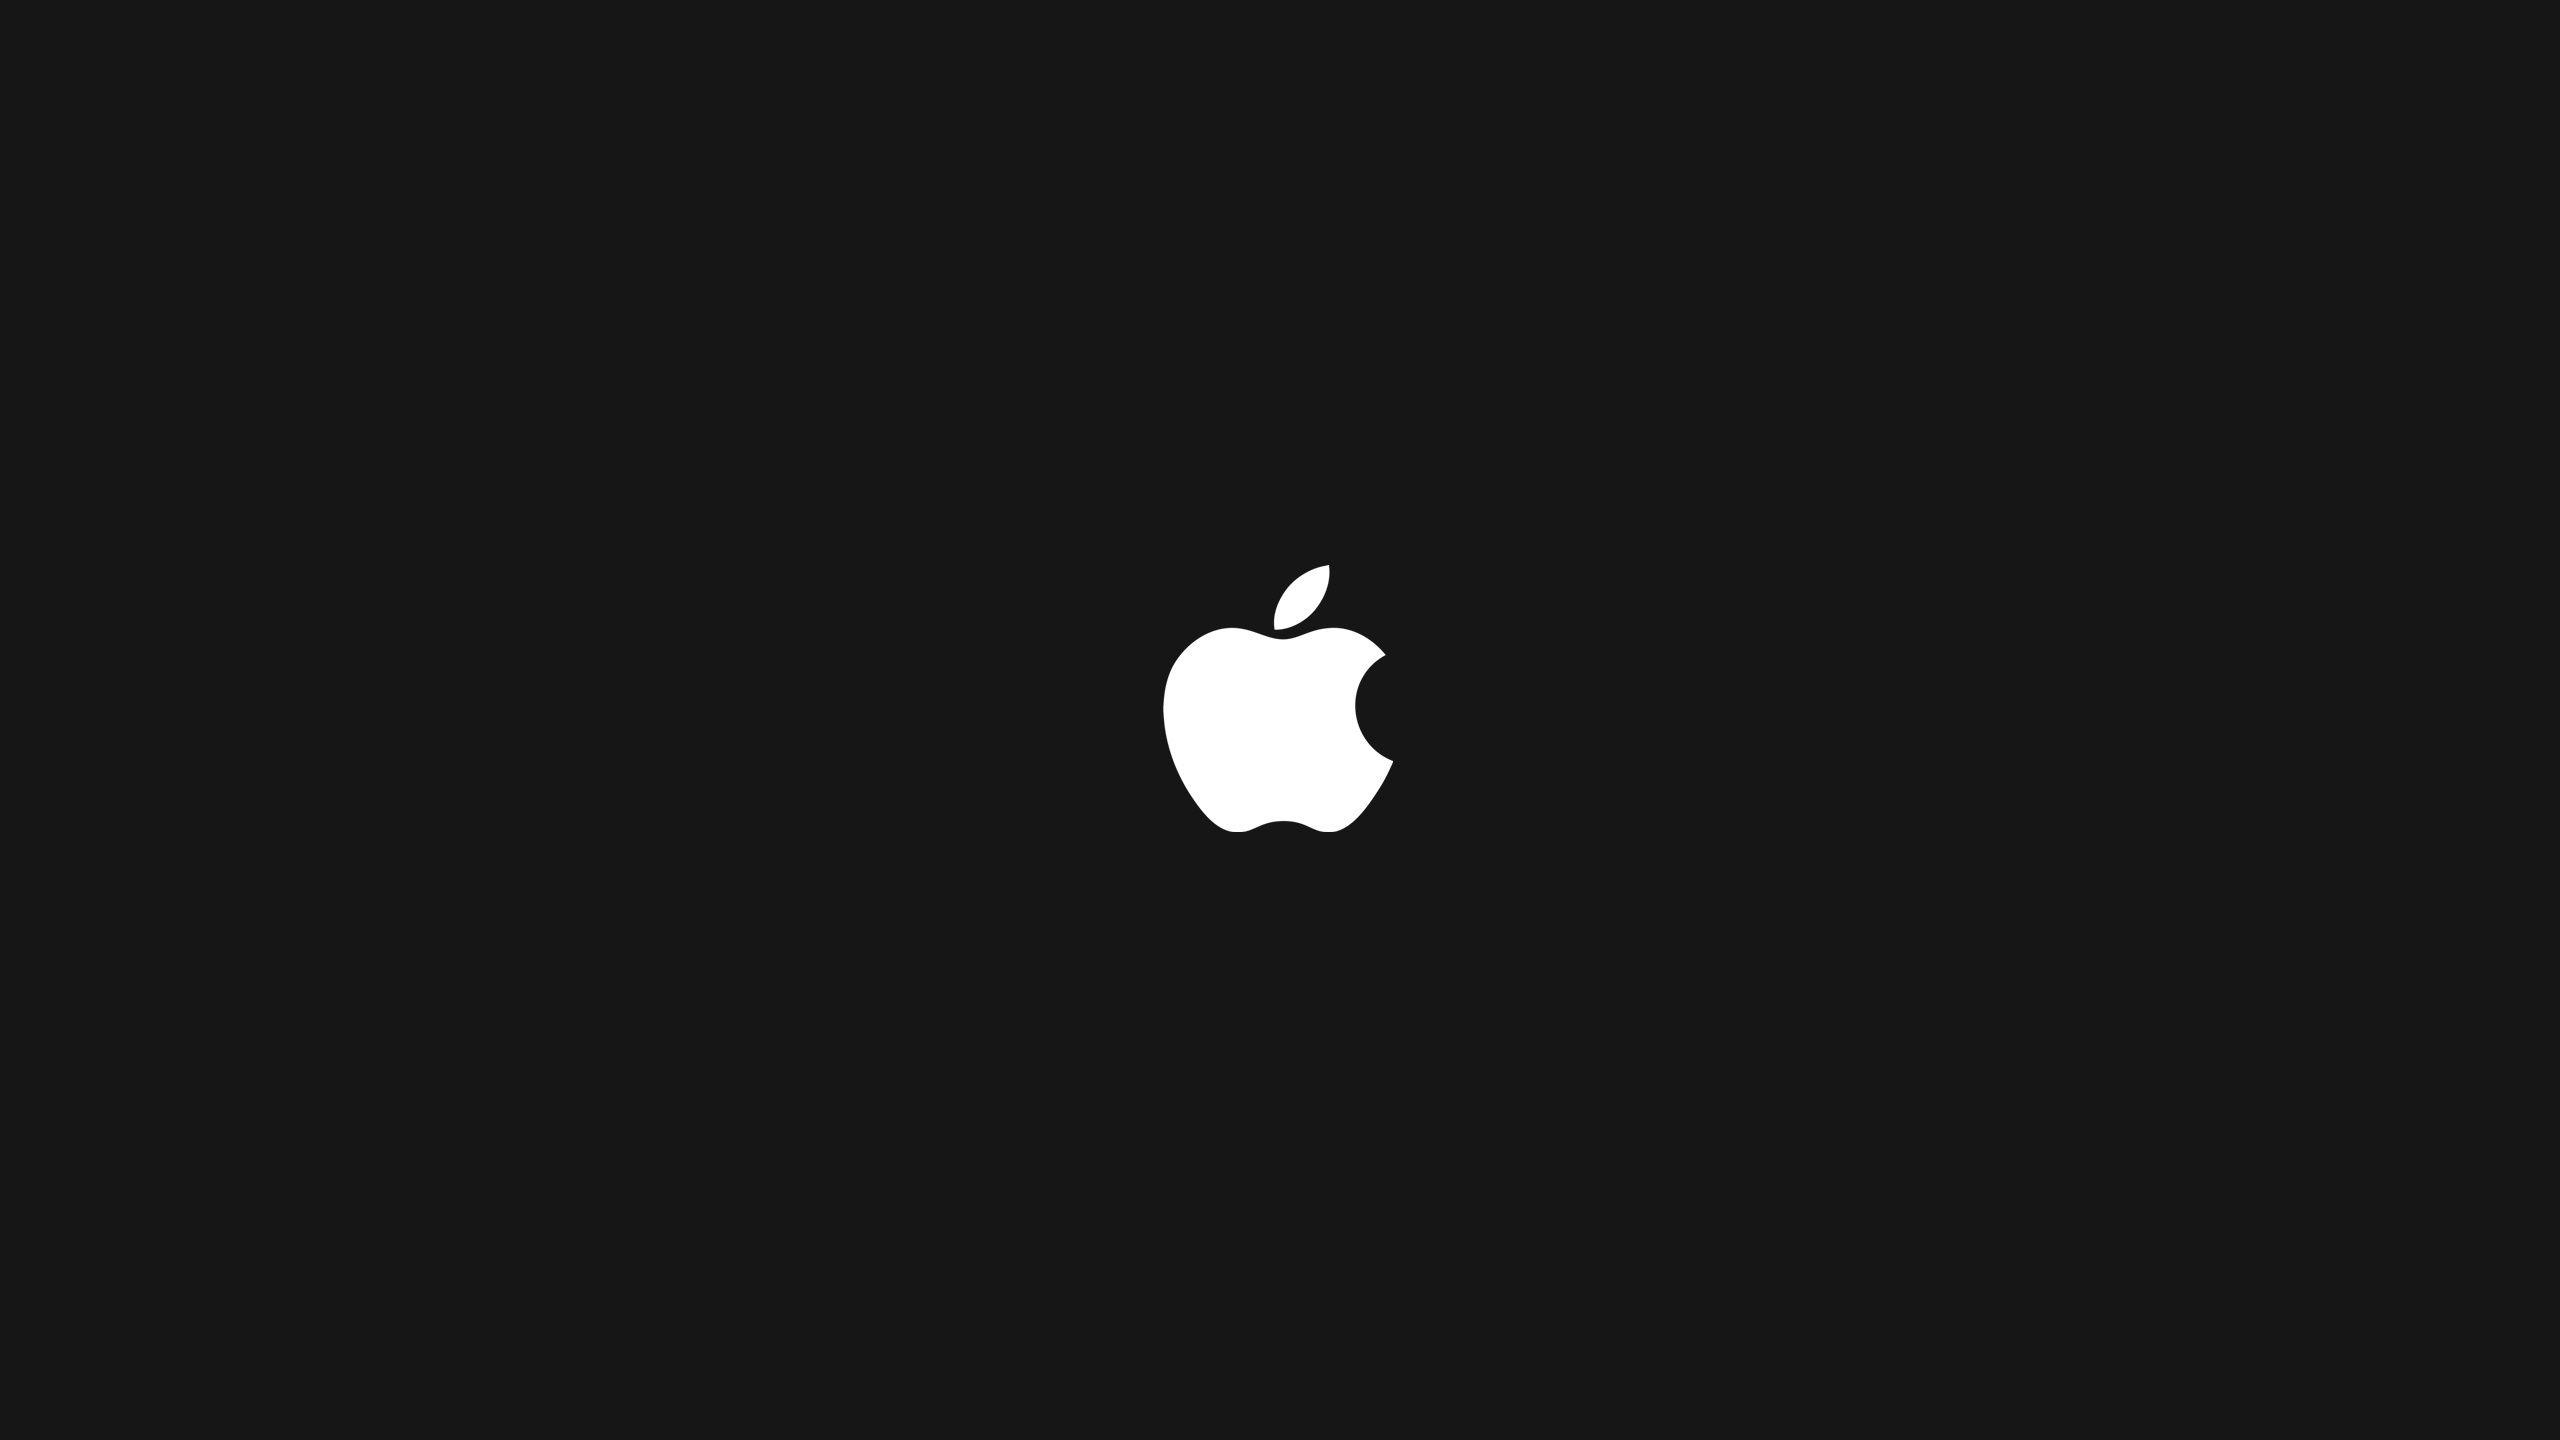 Black Mac Logo - 2560x1440 Apple Logo (black) desktop PC and Mac wallpaper